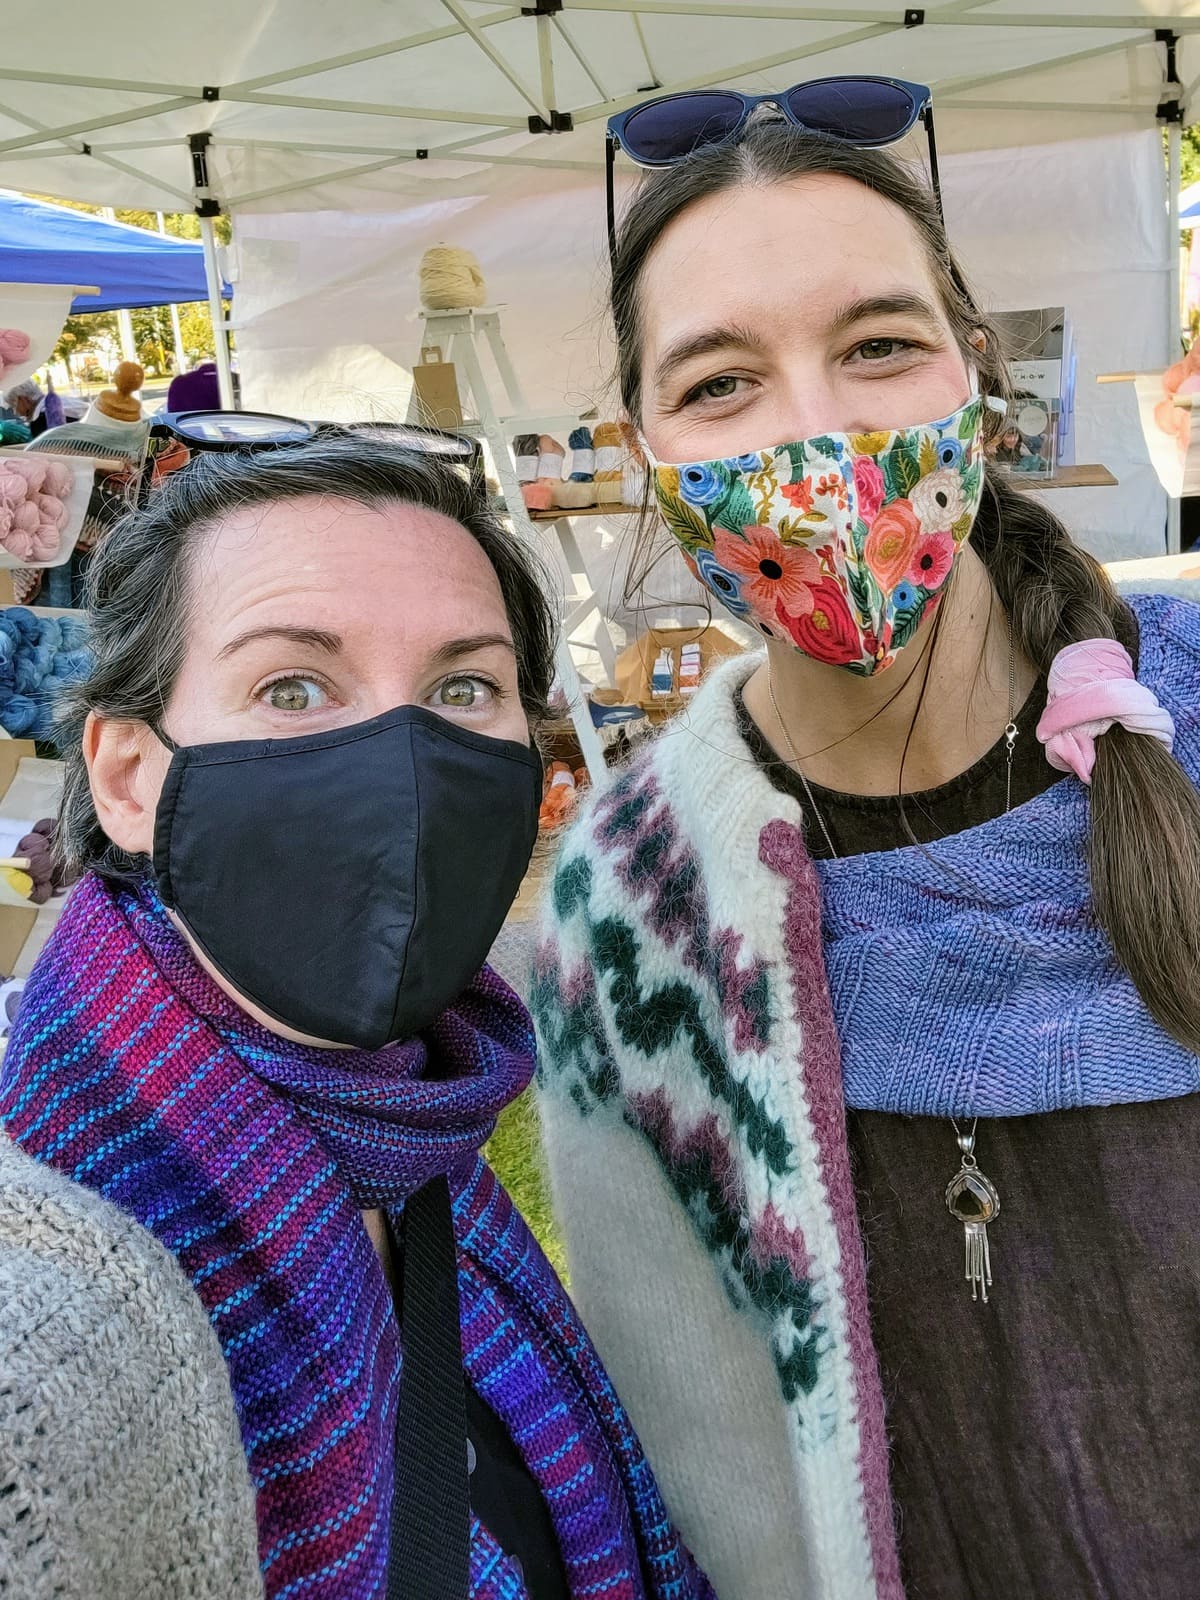 Image description: Two white women wearing face masks pose for a selfie.